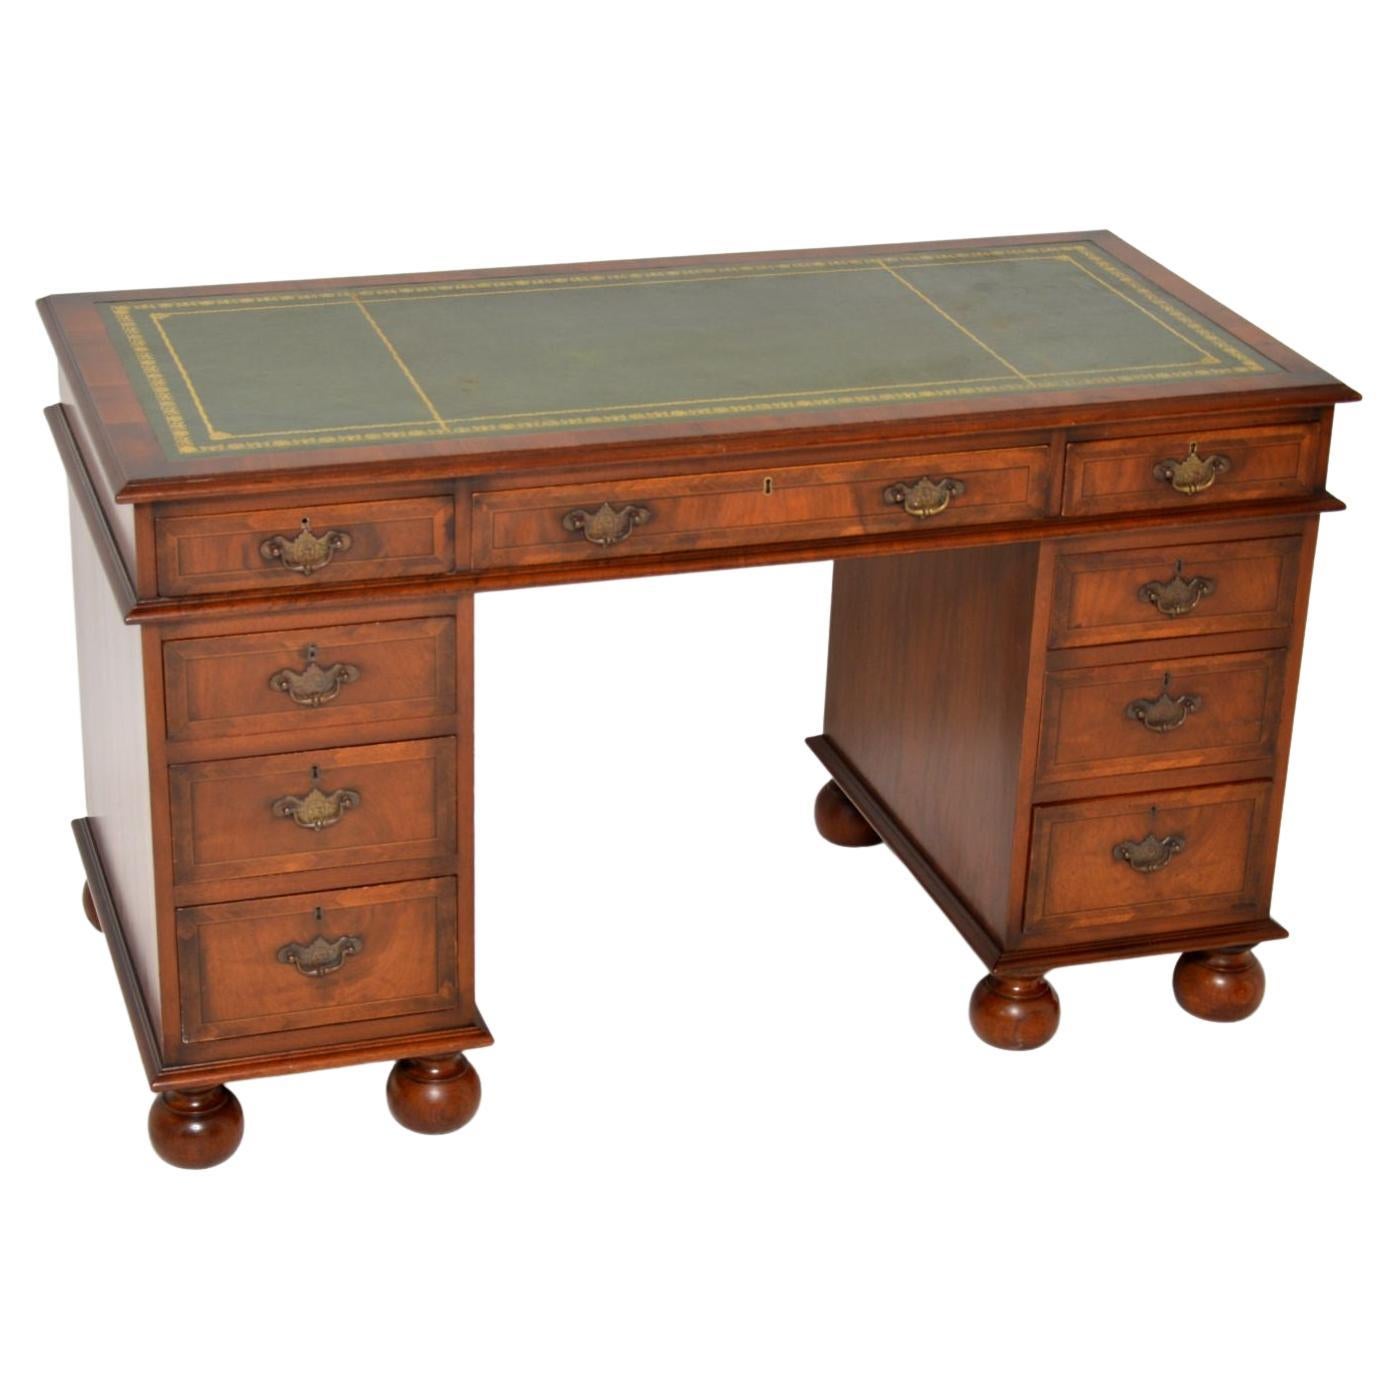 Antique William & Mary Revival Desk in Walnut